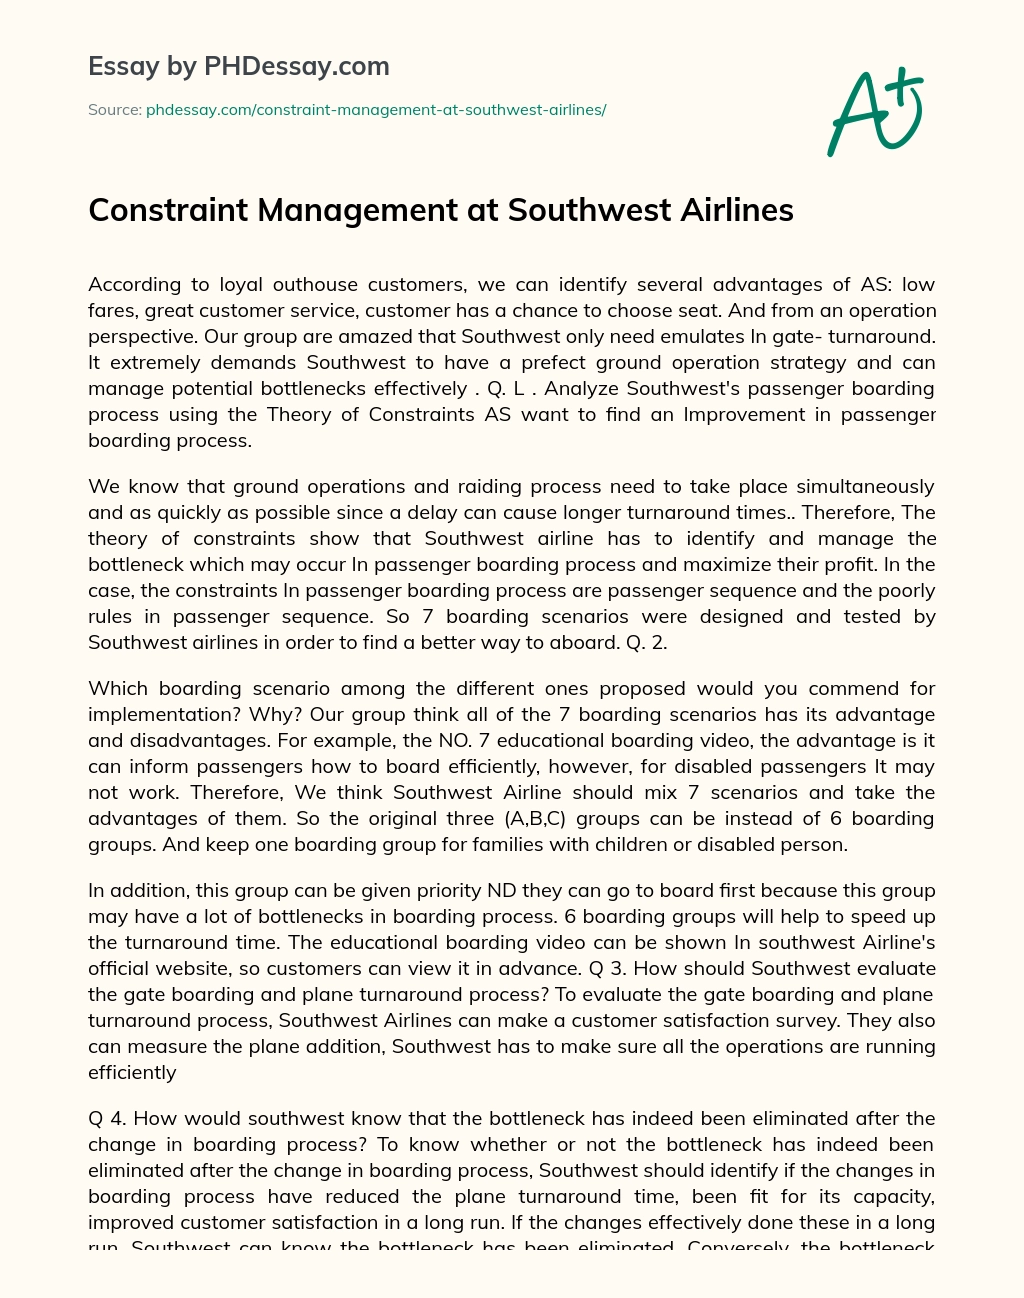 Constraint Management at Southwest Airlines essay